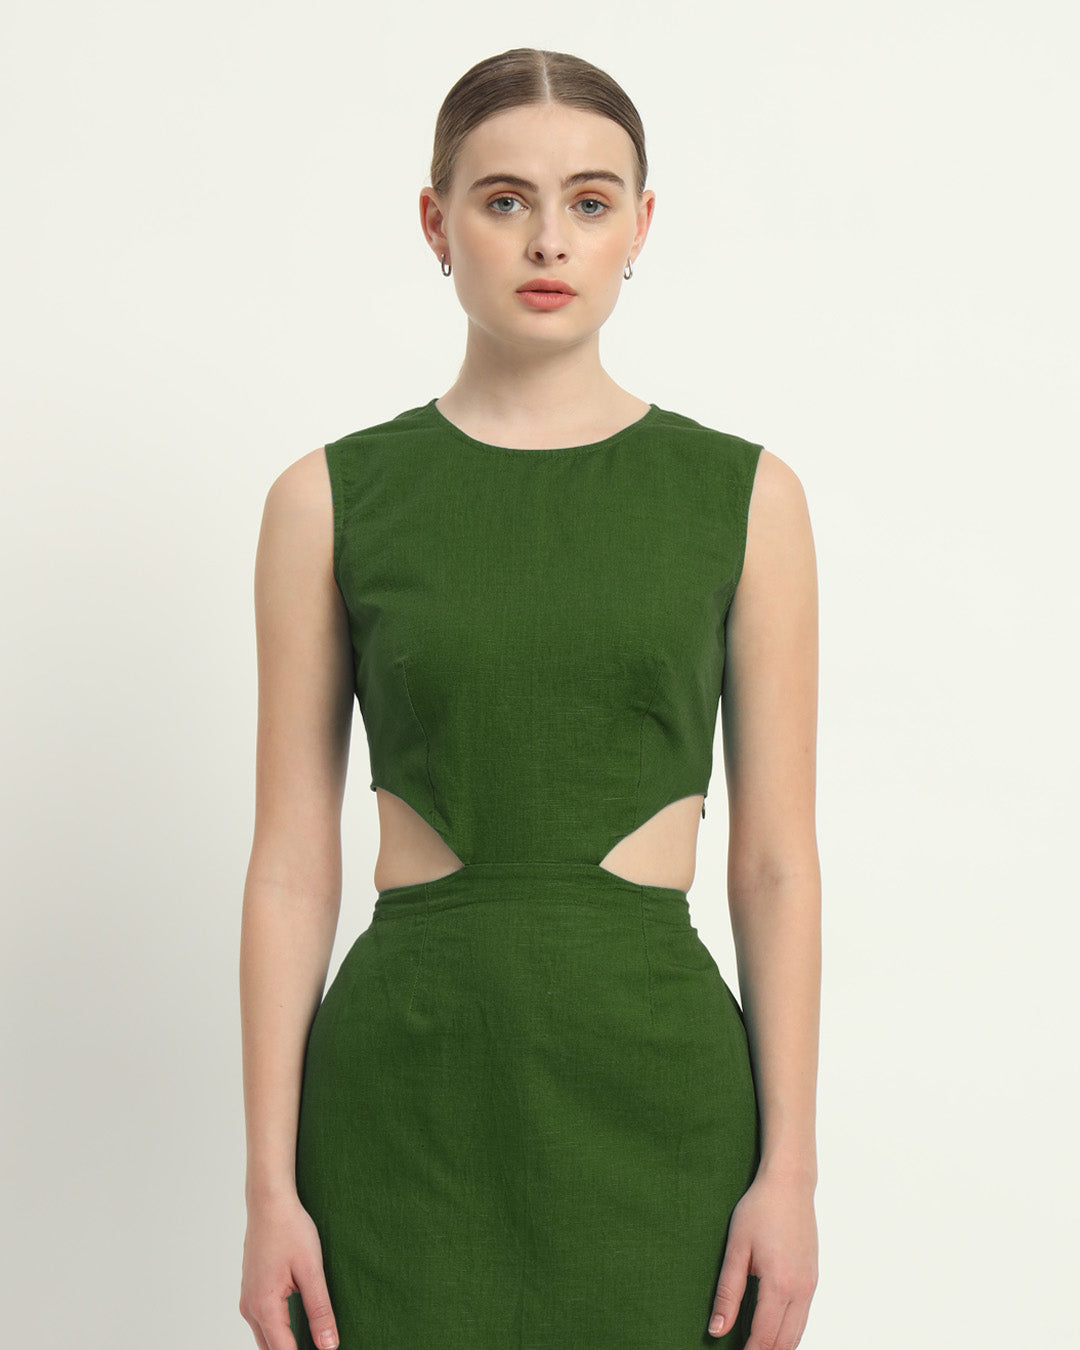 The Livingston Emerald Cotton Dress